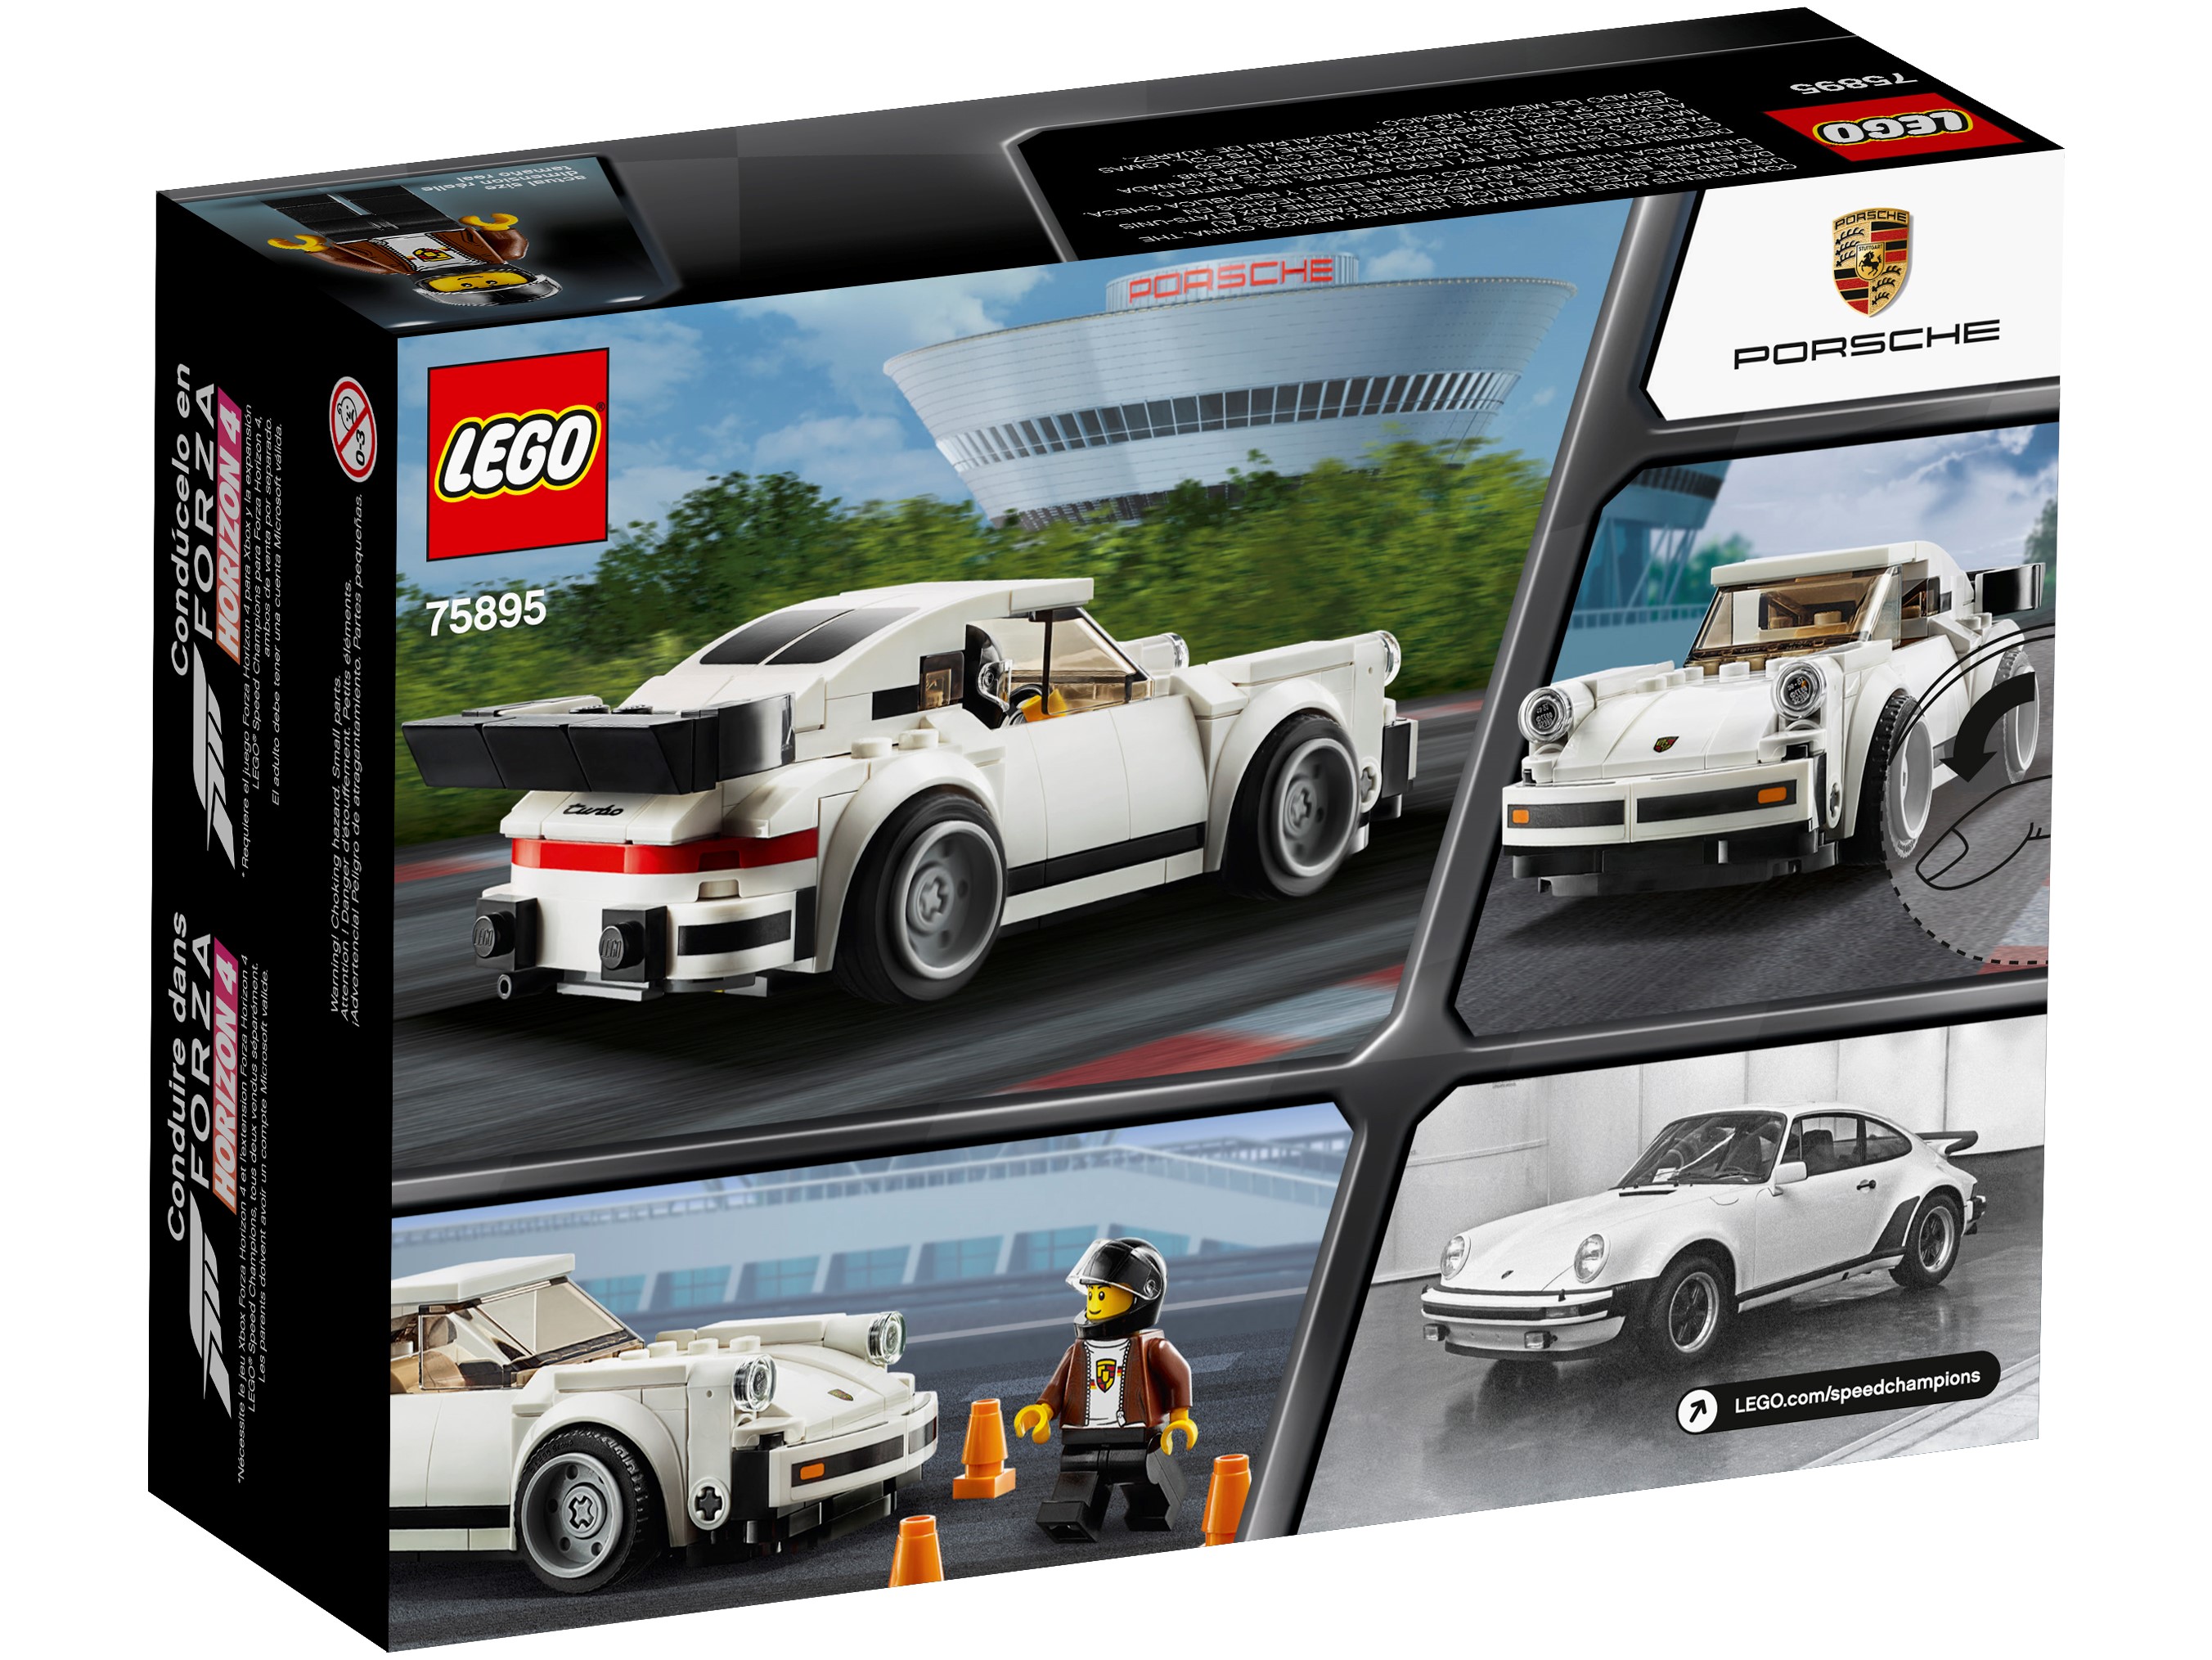 LEGO Wave Creator Expert Porsche 911